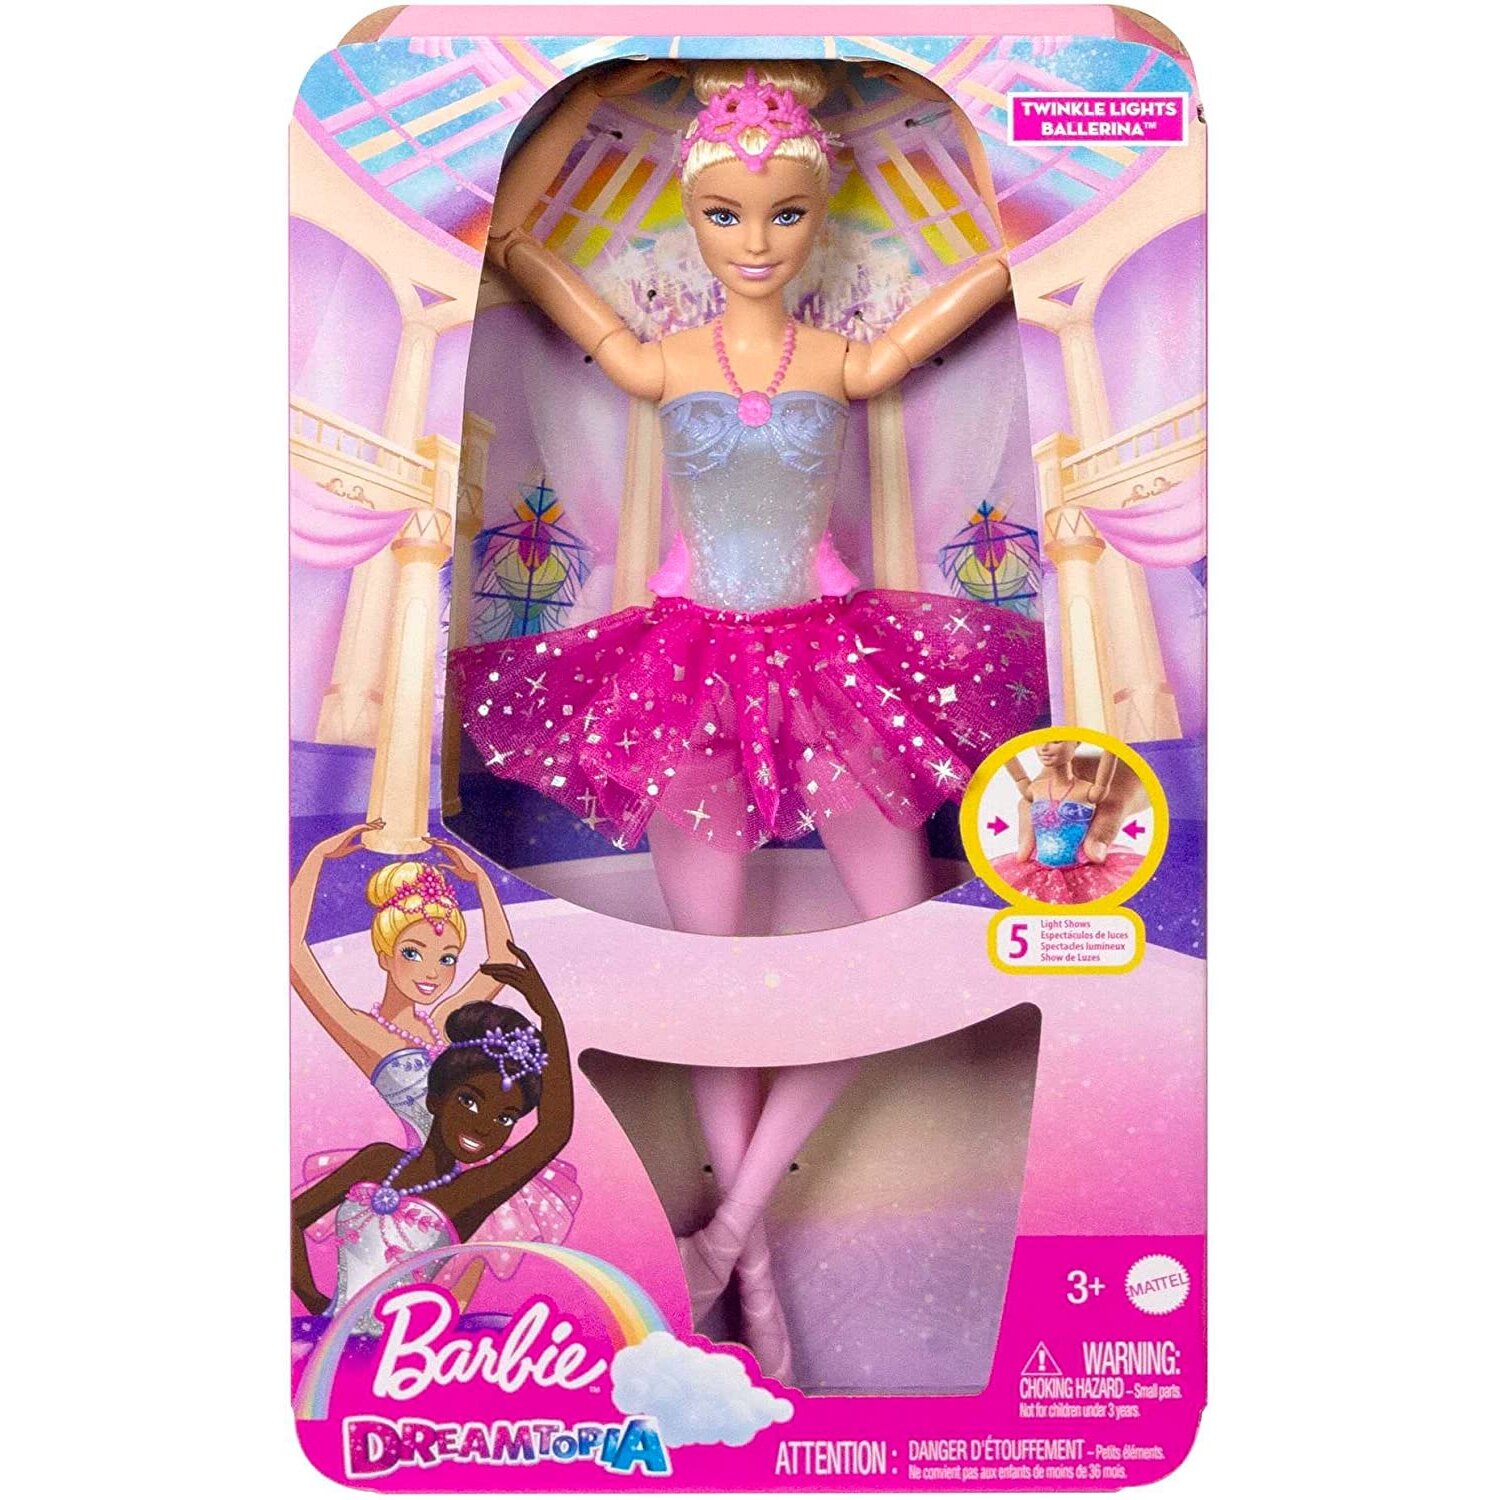 Mattel Barbie Dreamtopia -Twinkle Lights Ballerina Doll Toys